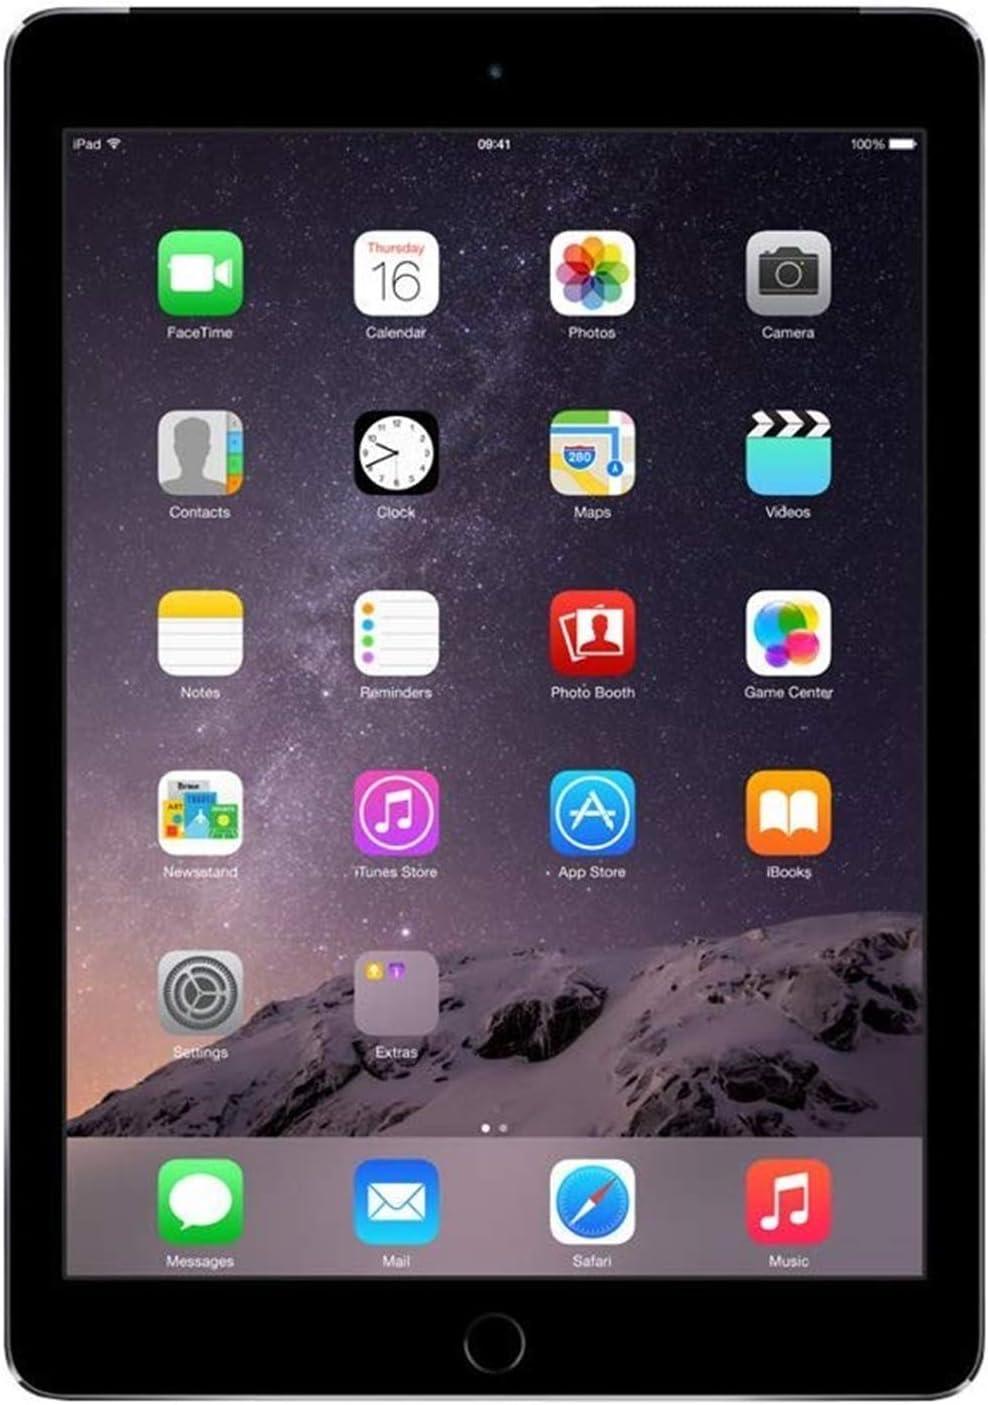 Apple Ipad Air 2 64GB Factory Unlocked (Space Gray, Wi-Fi + Cellular 4G) Newest Version (Renewed)